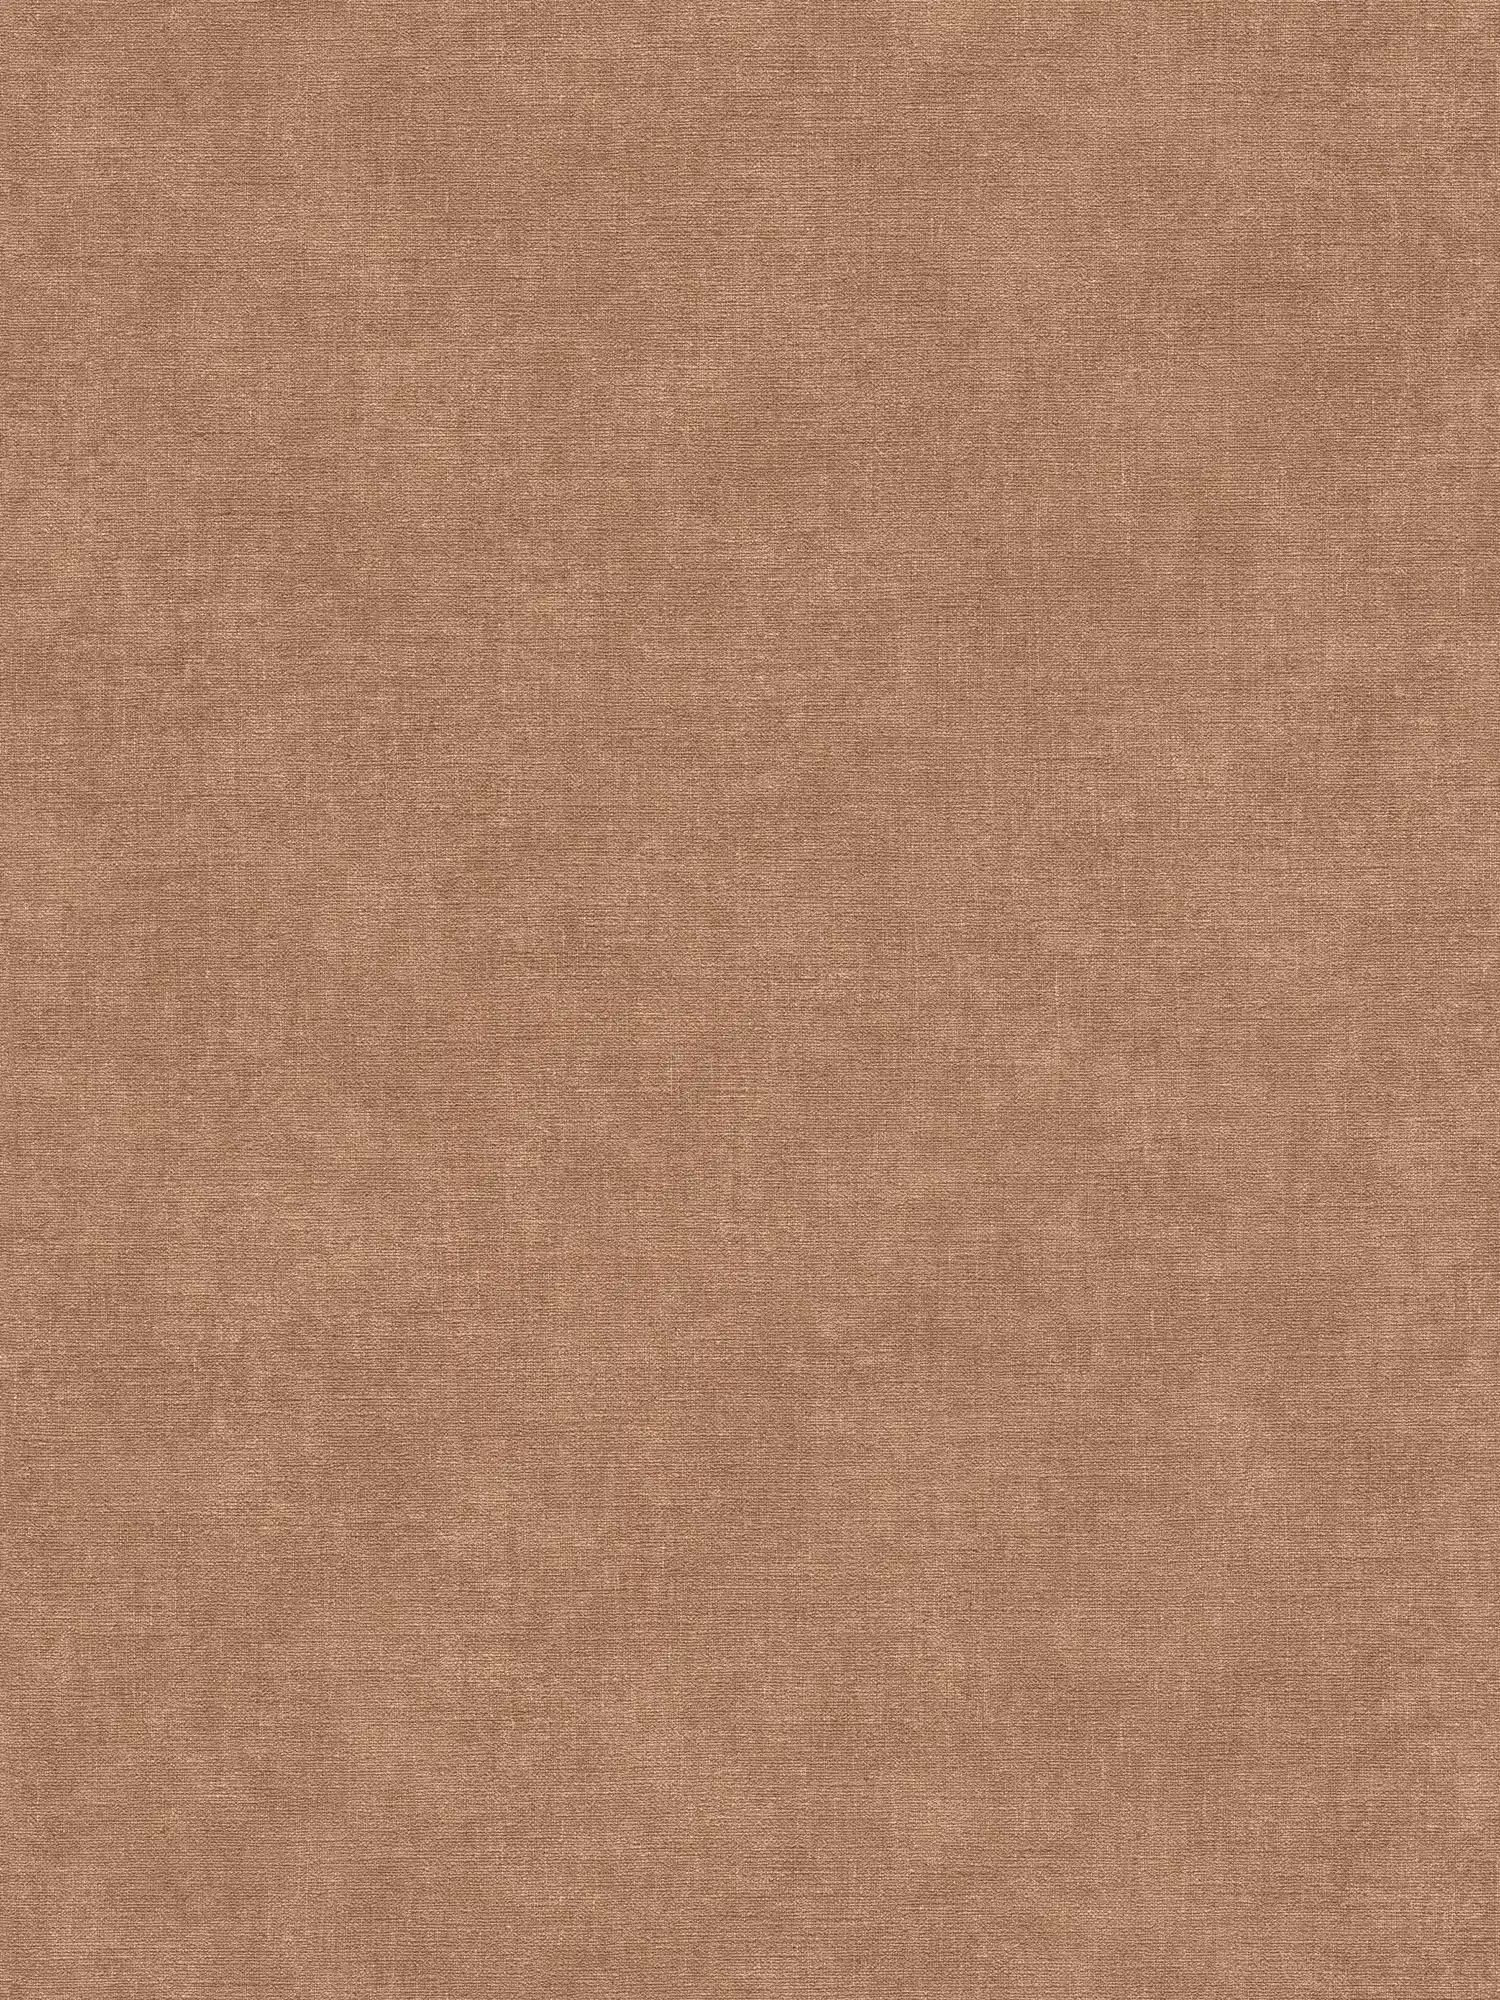 Non-woven wallpaper in plaster look, single-coloured - brown, orange
